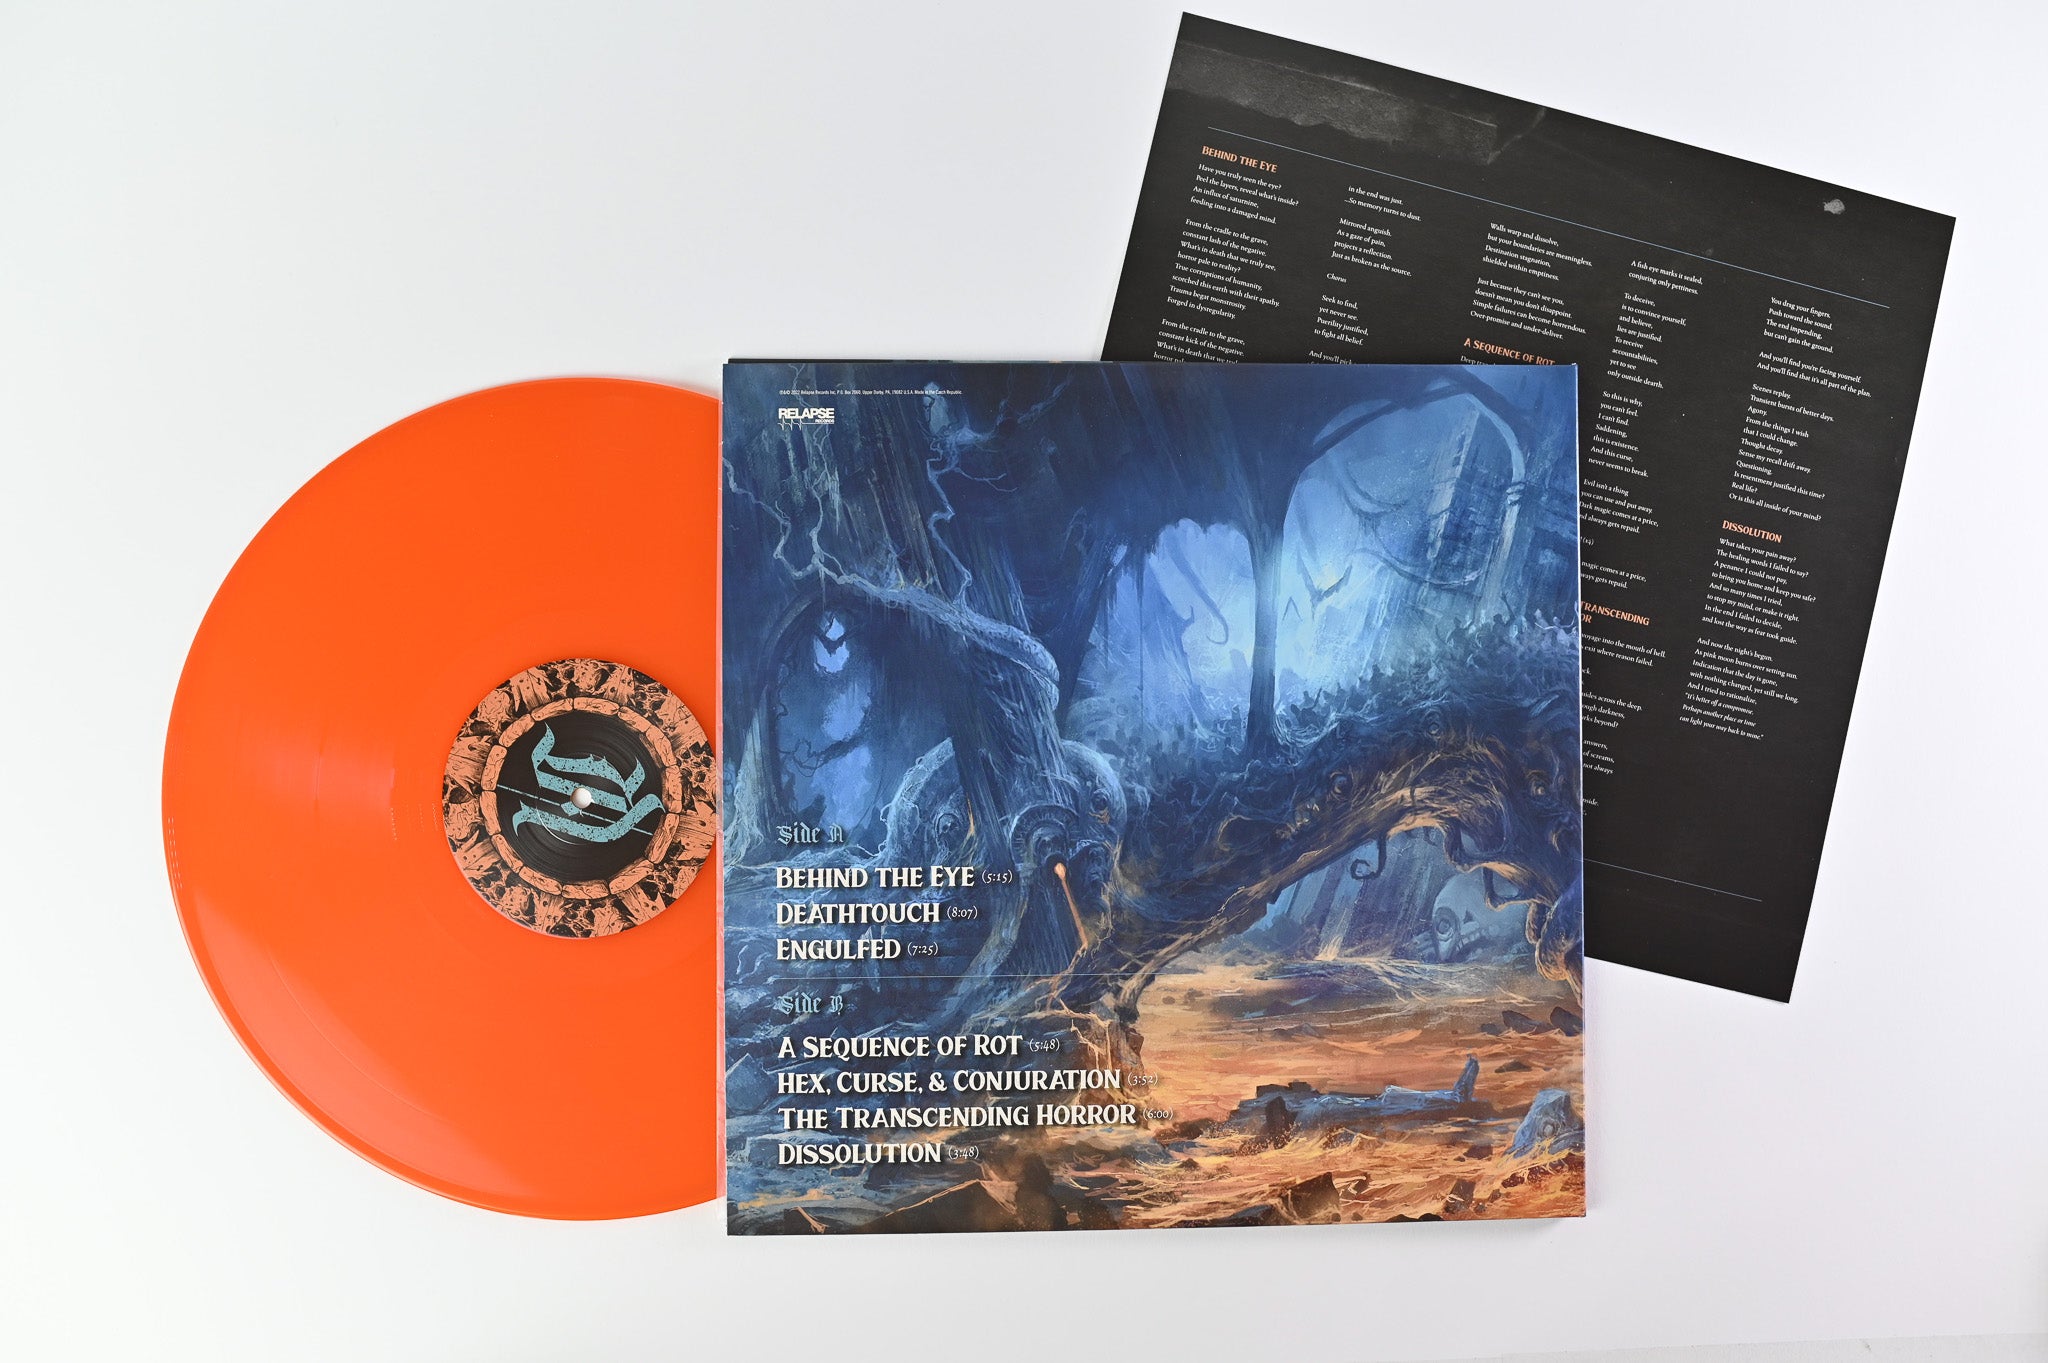 Temple Of Void - Summoning The Slayer on Relapse Records - Orange Vinyl